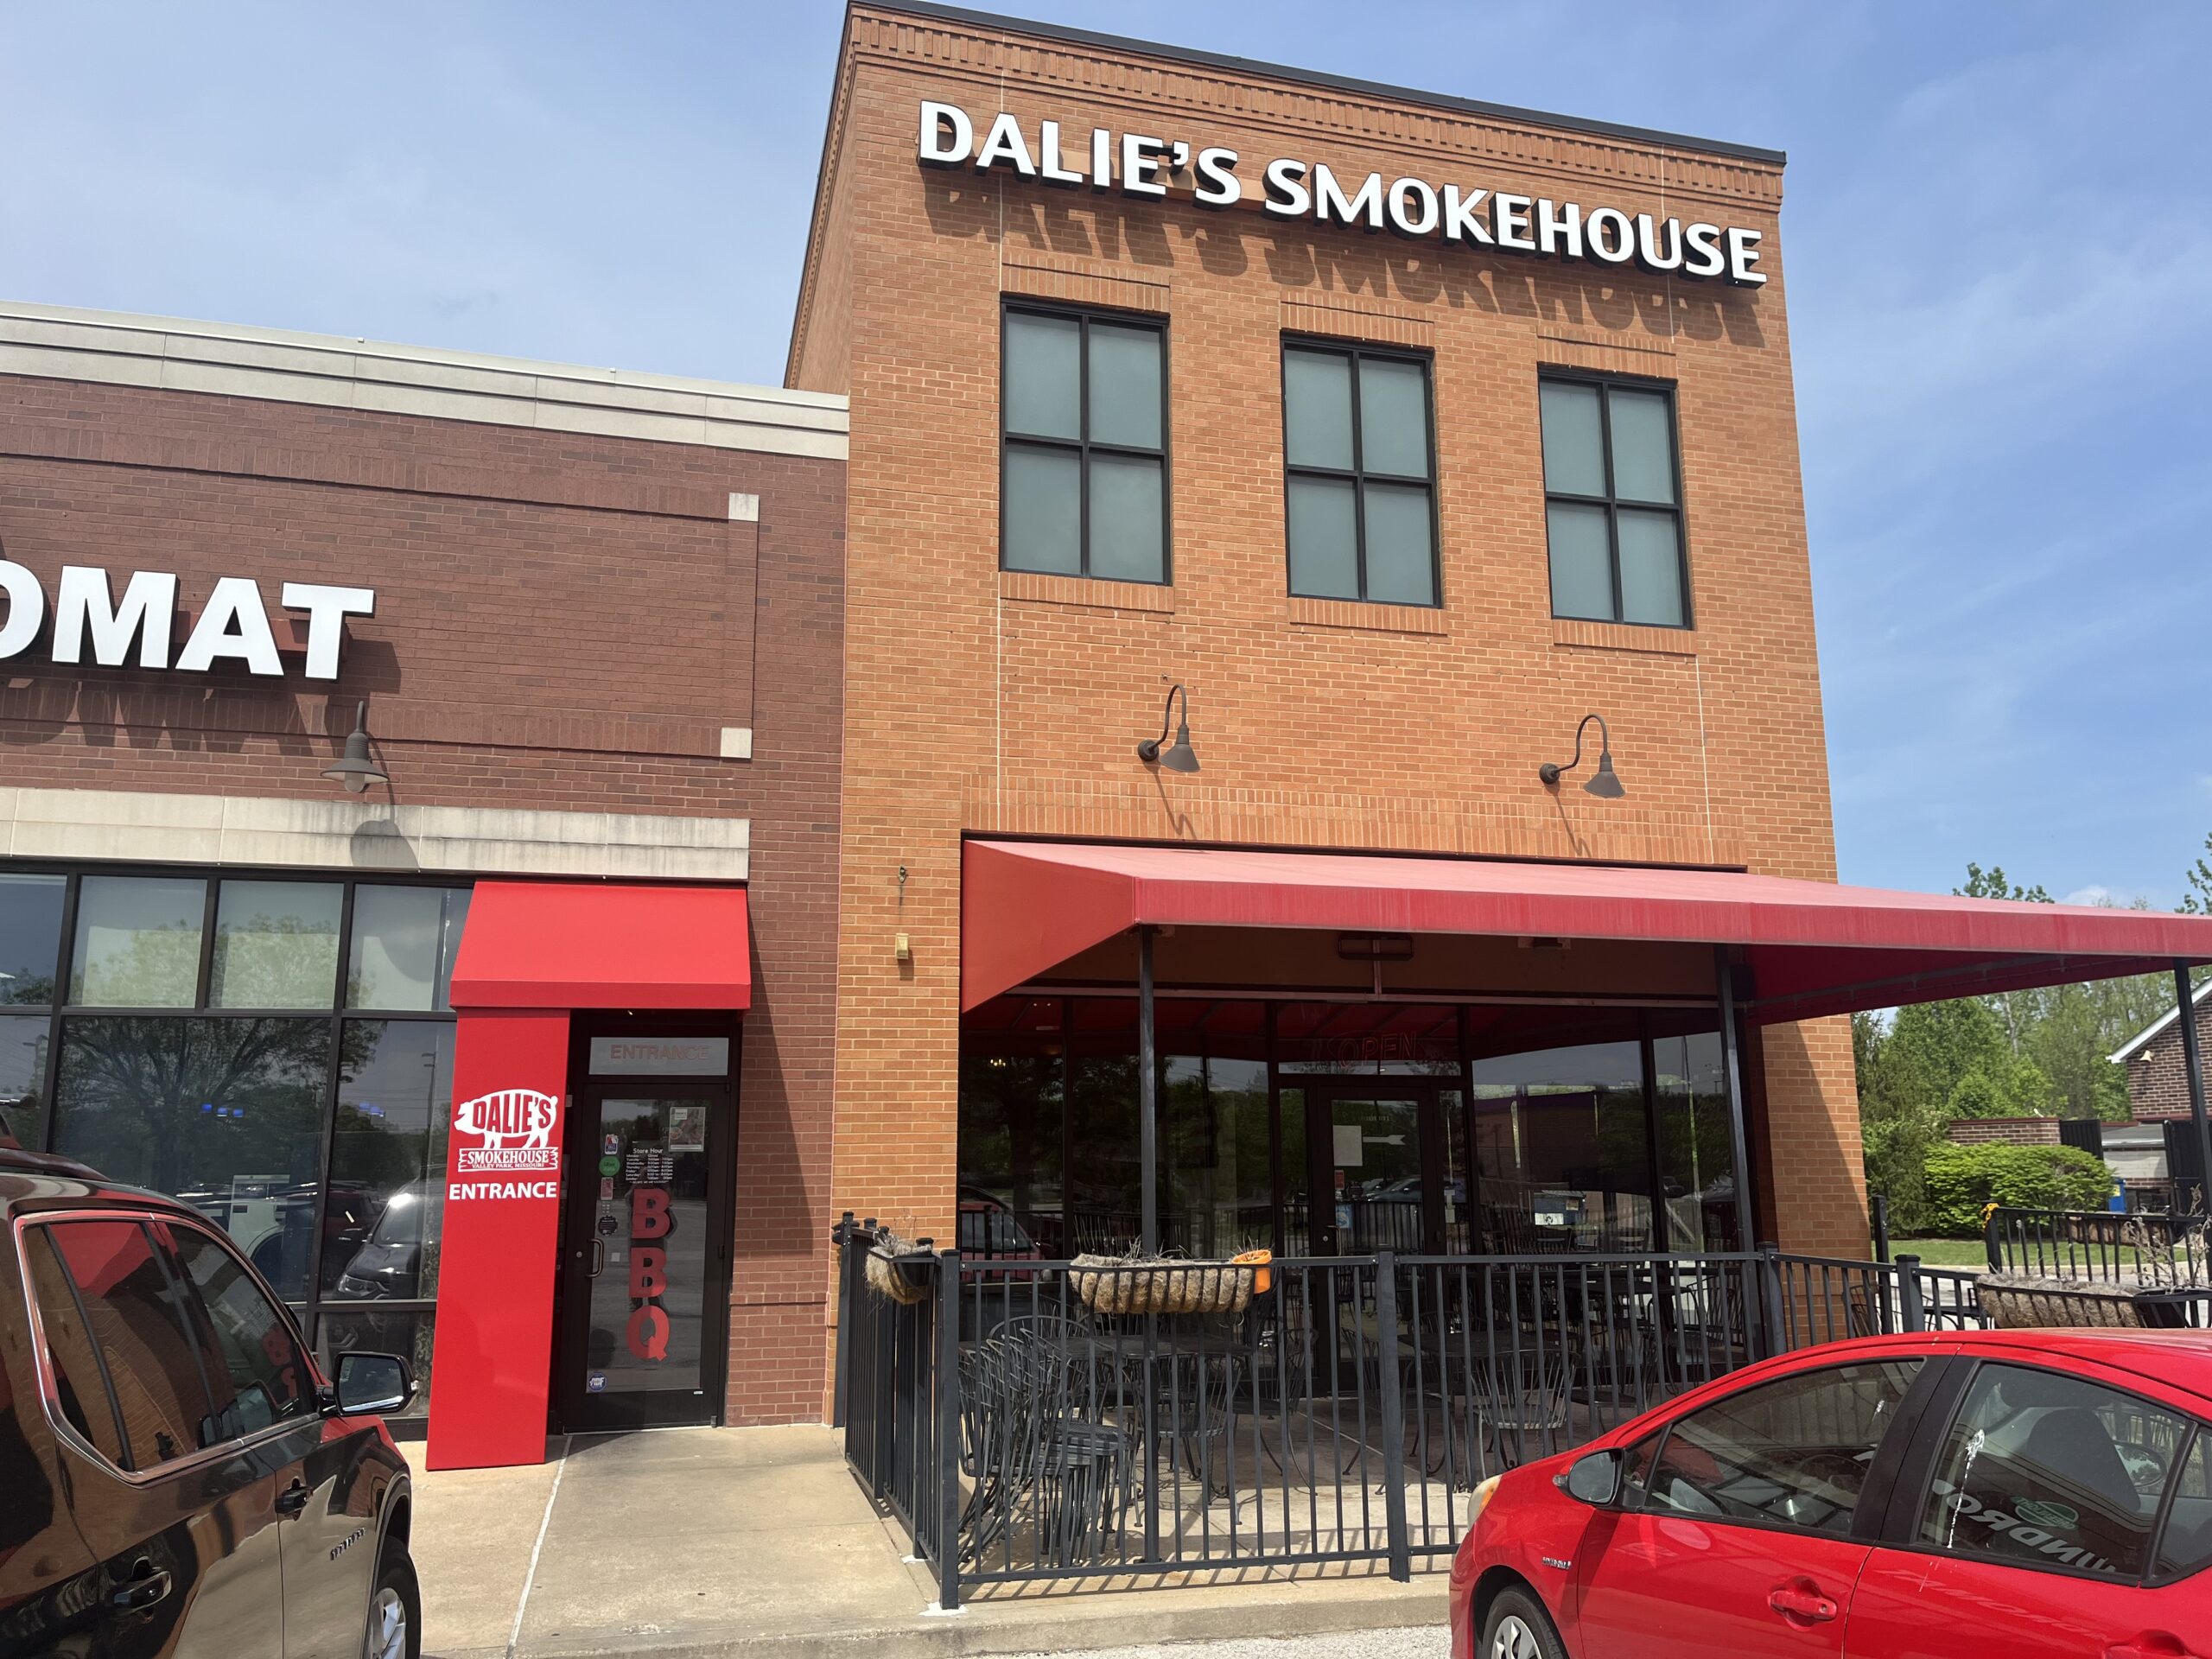 Dalie's Smokehouse - Valley Park, MO